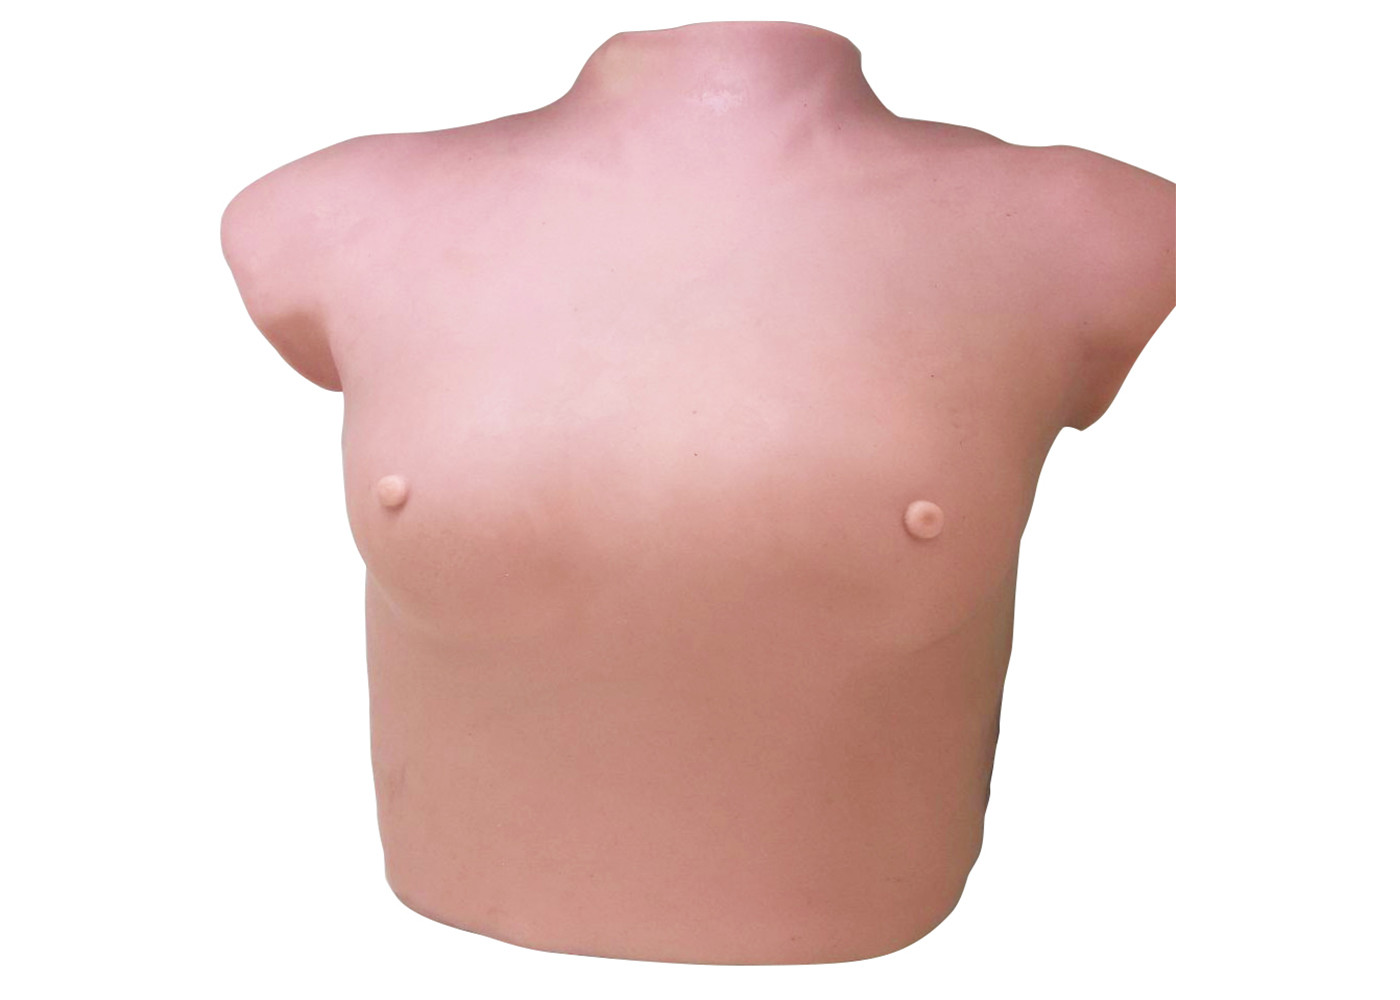 Samica górna część ciała simulator modreate rozmiar piersi do badania piersi piersi